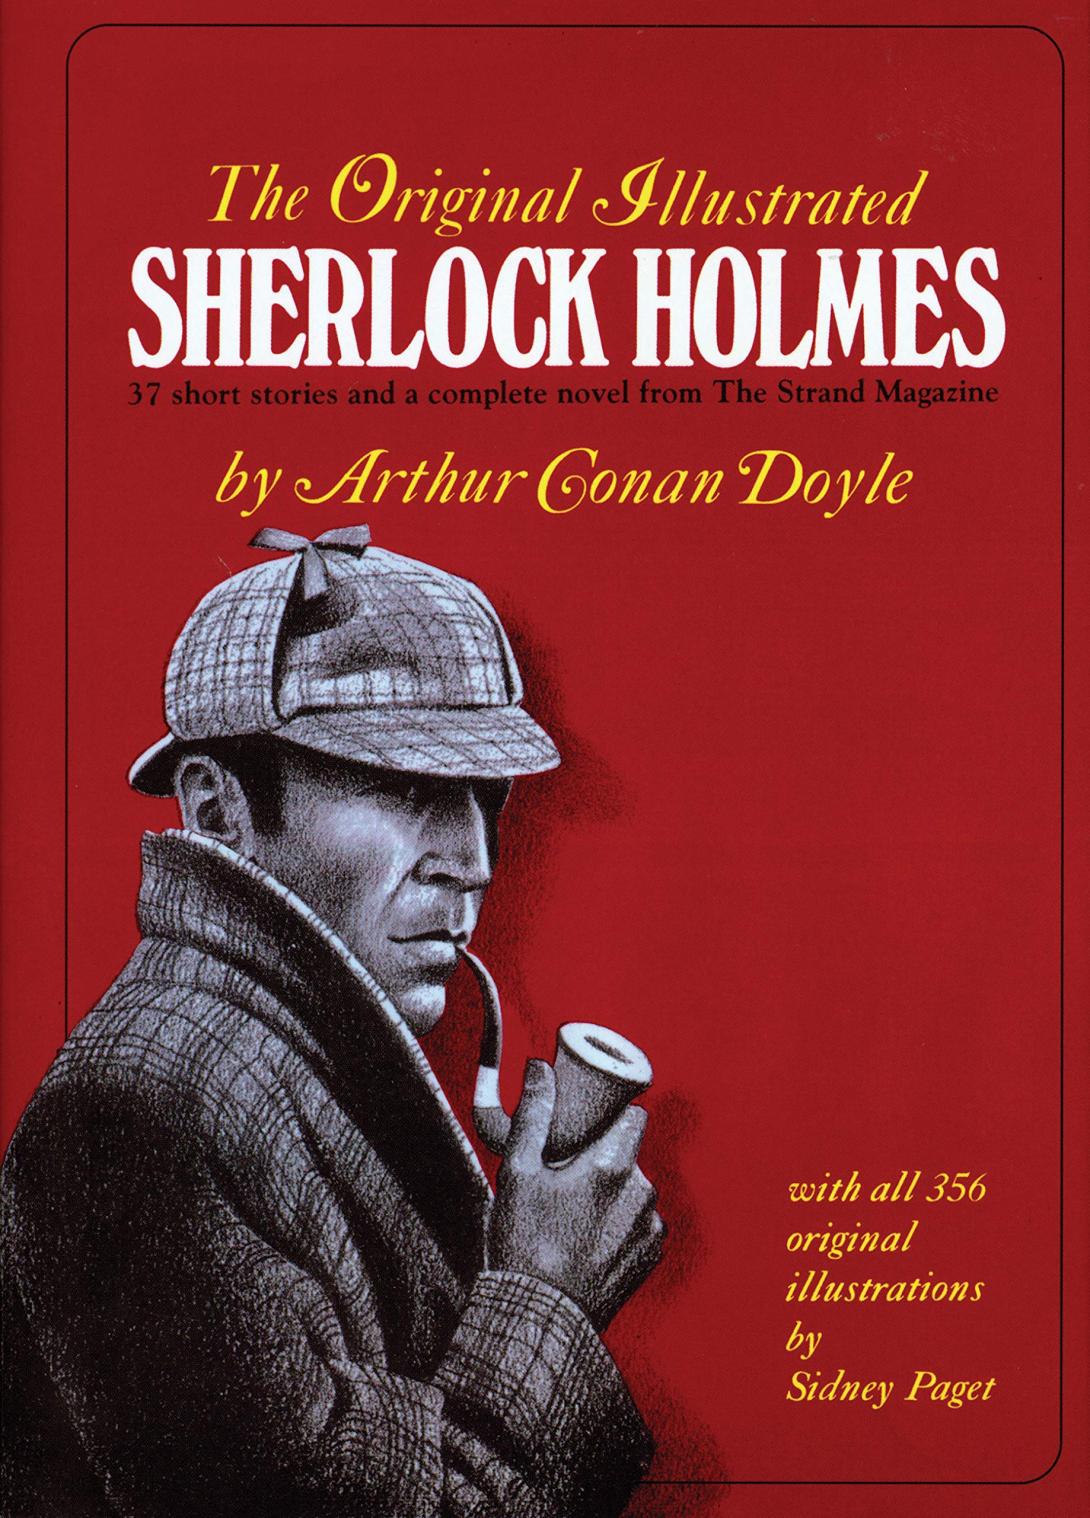 Nasce Arthur Conan Doyle, o pai do detetive Sherlock Holmes